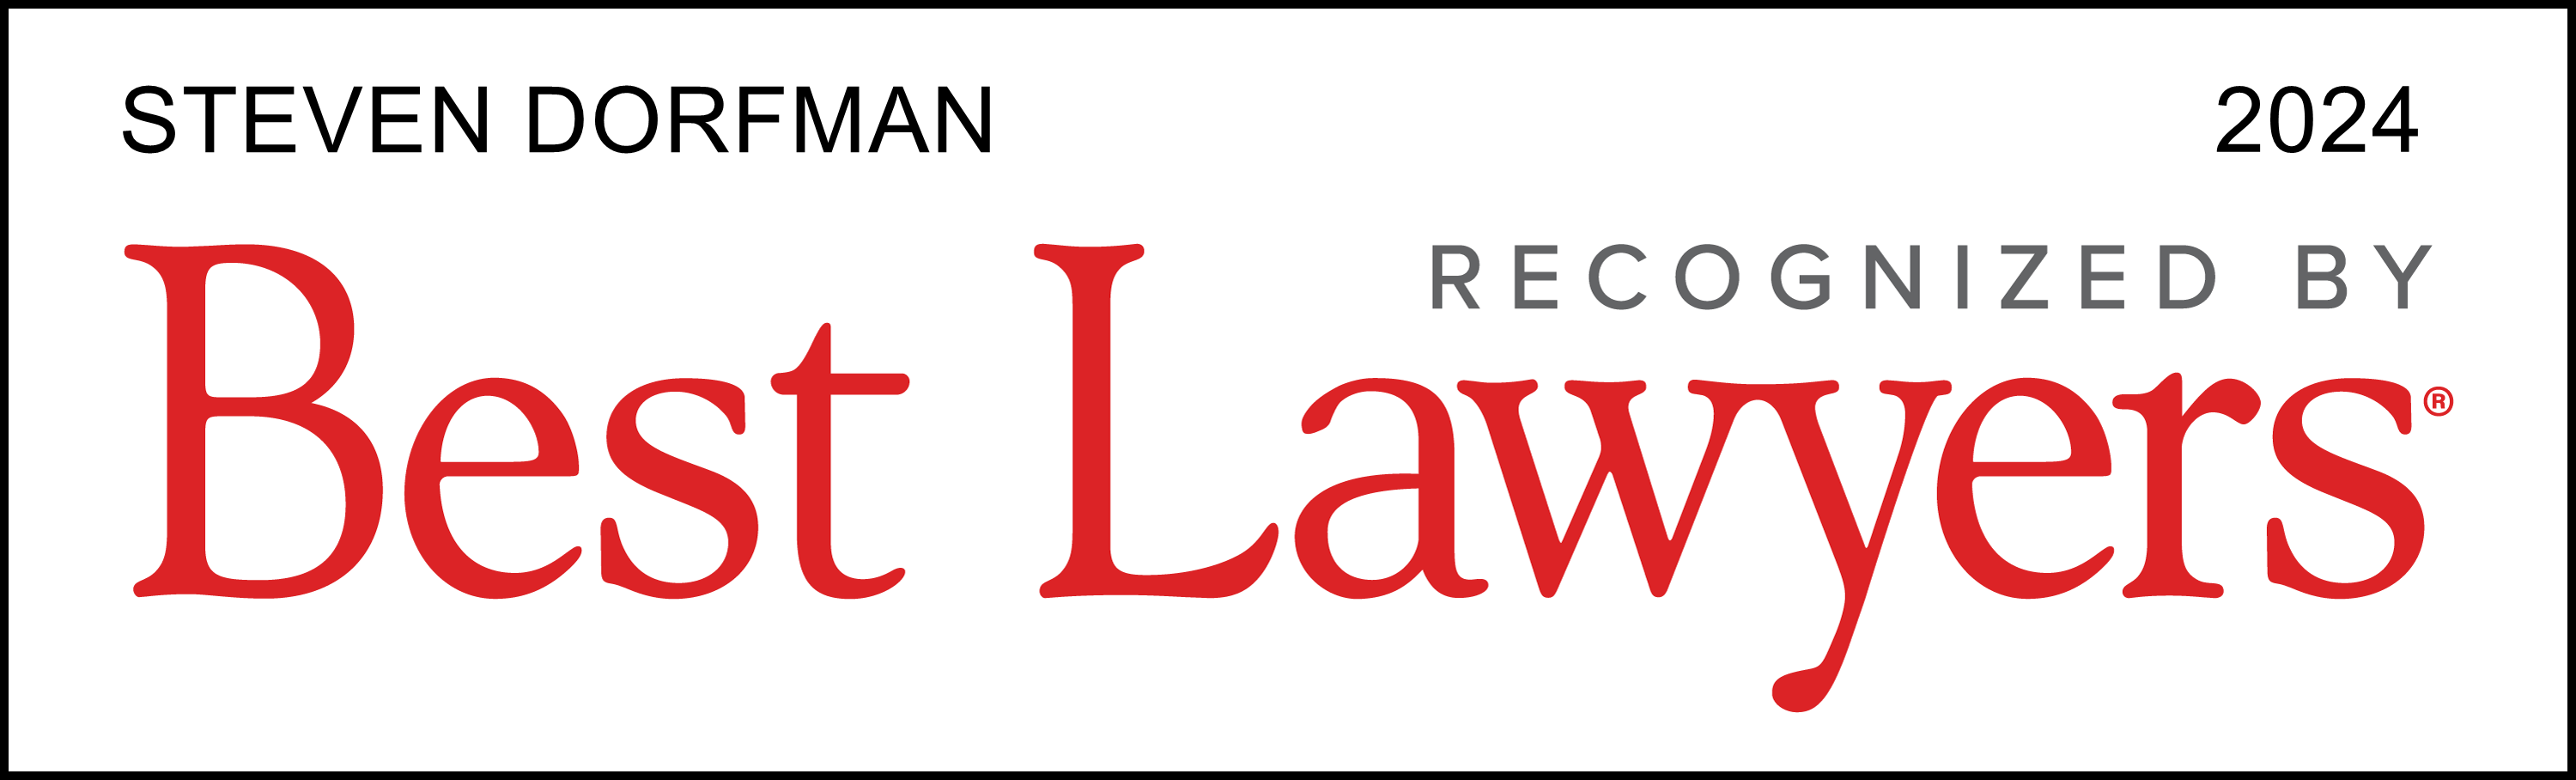 Steven Dorfman recognized by Best Lawyers 2024